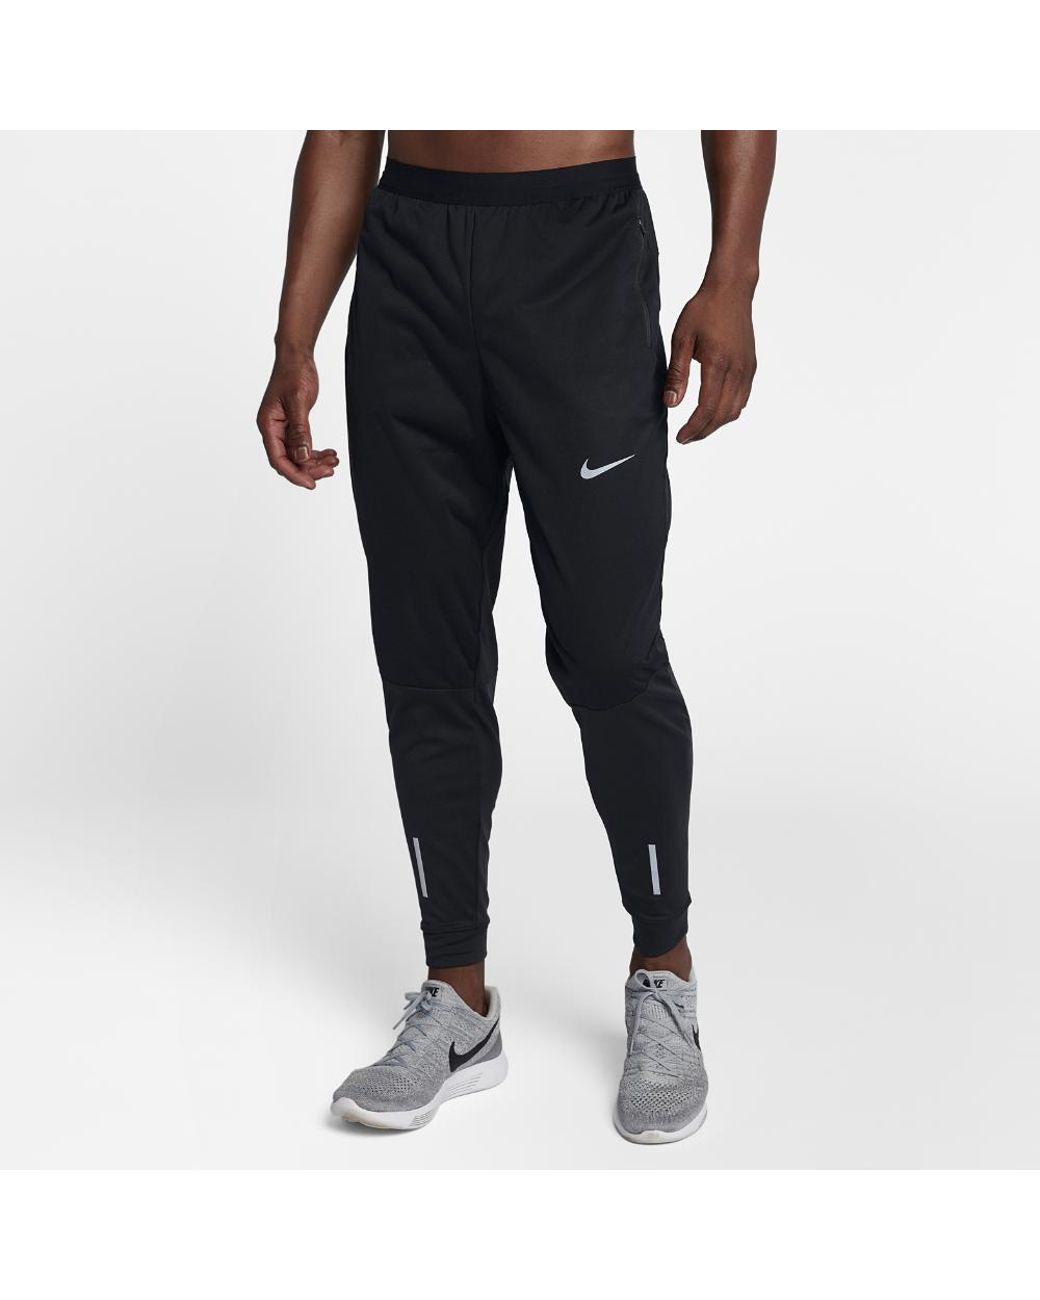 Nike Dri-FIT Fast Men's Running Pants - Midnight Navy